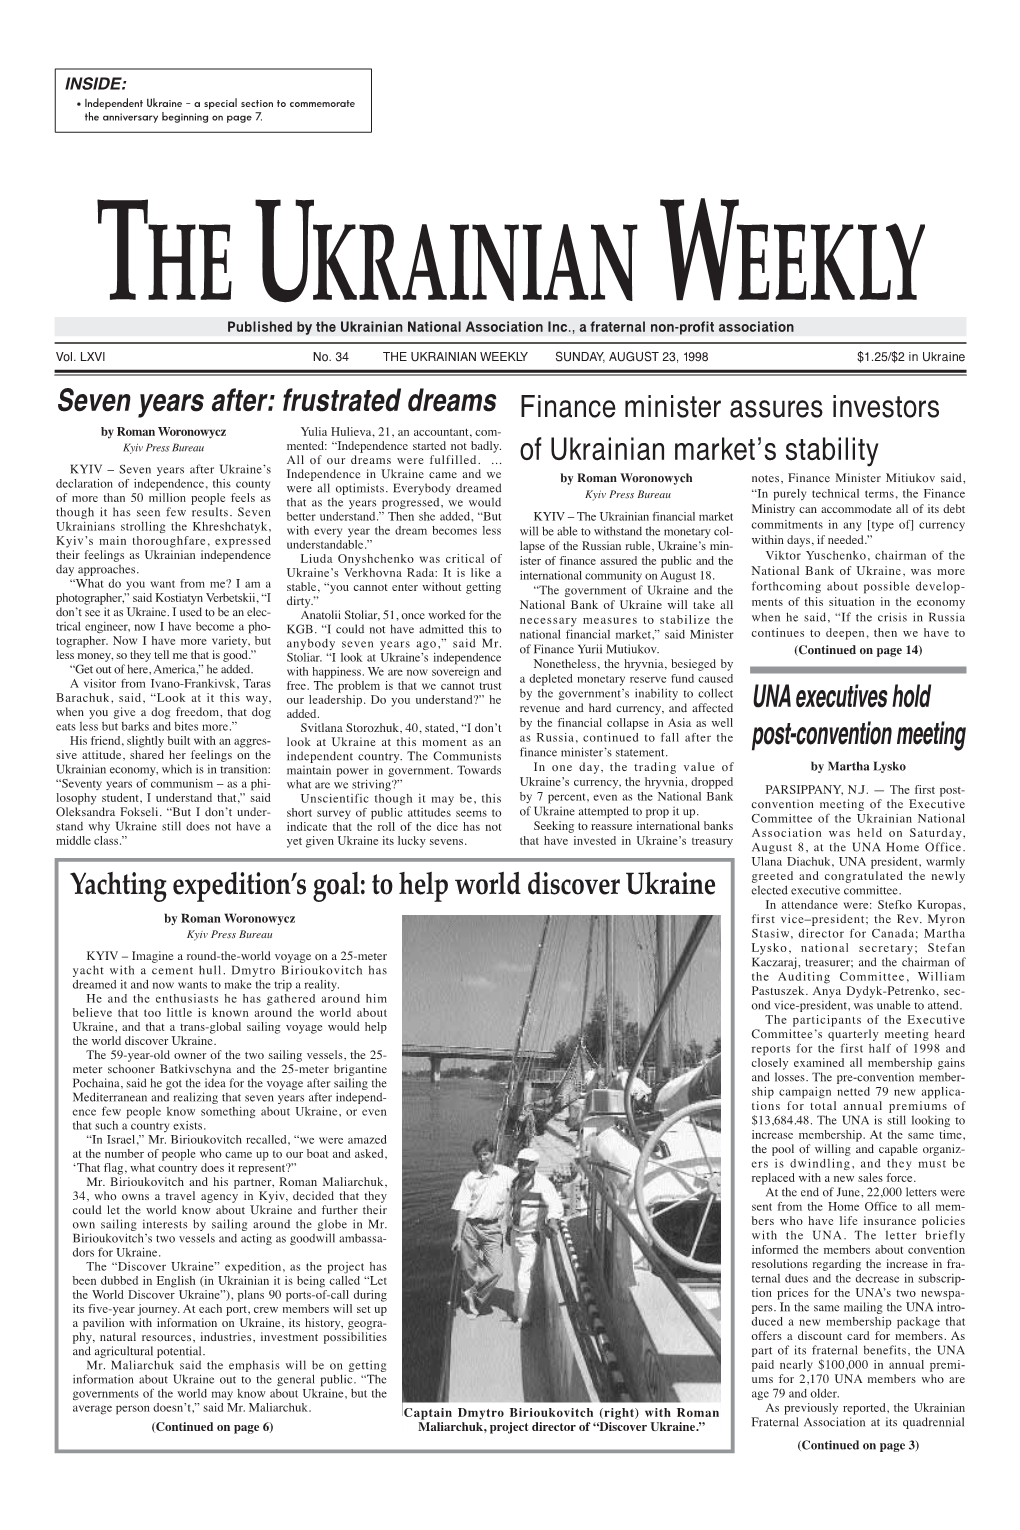 The Ukrainian Weekly 1998, No.34